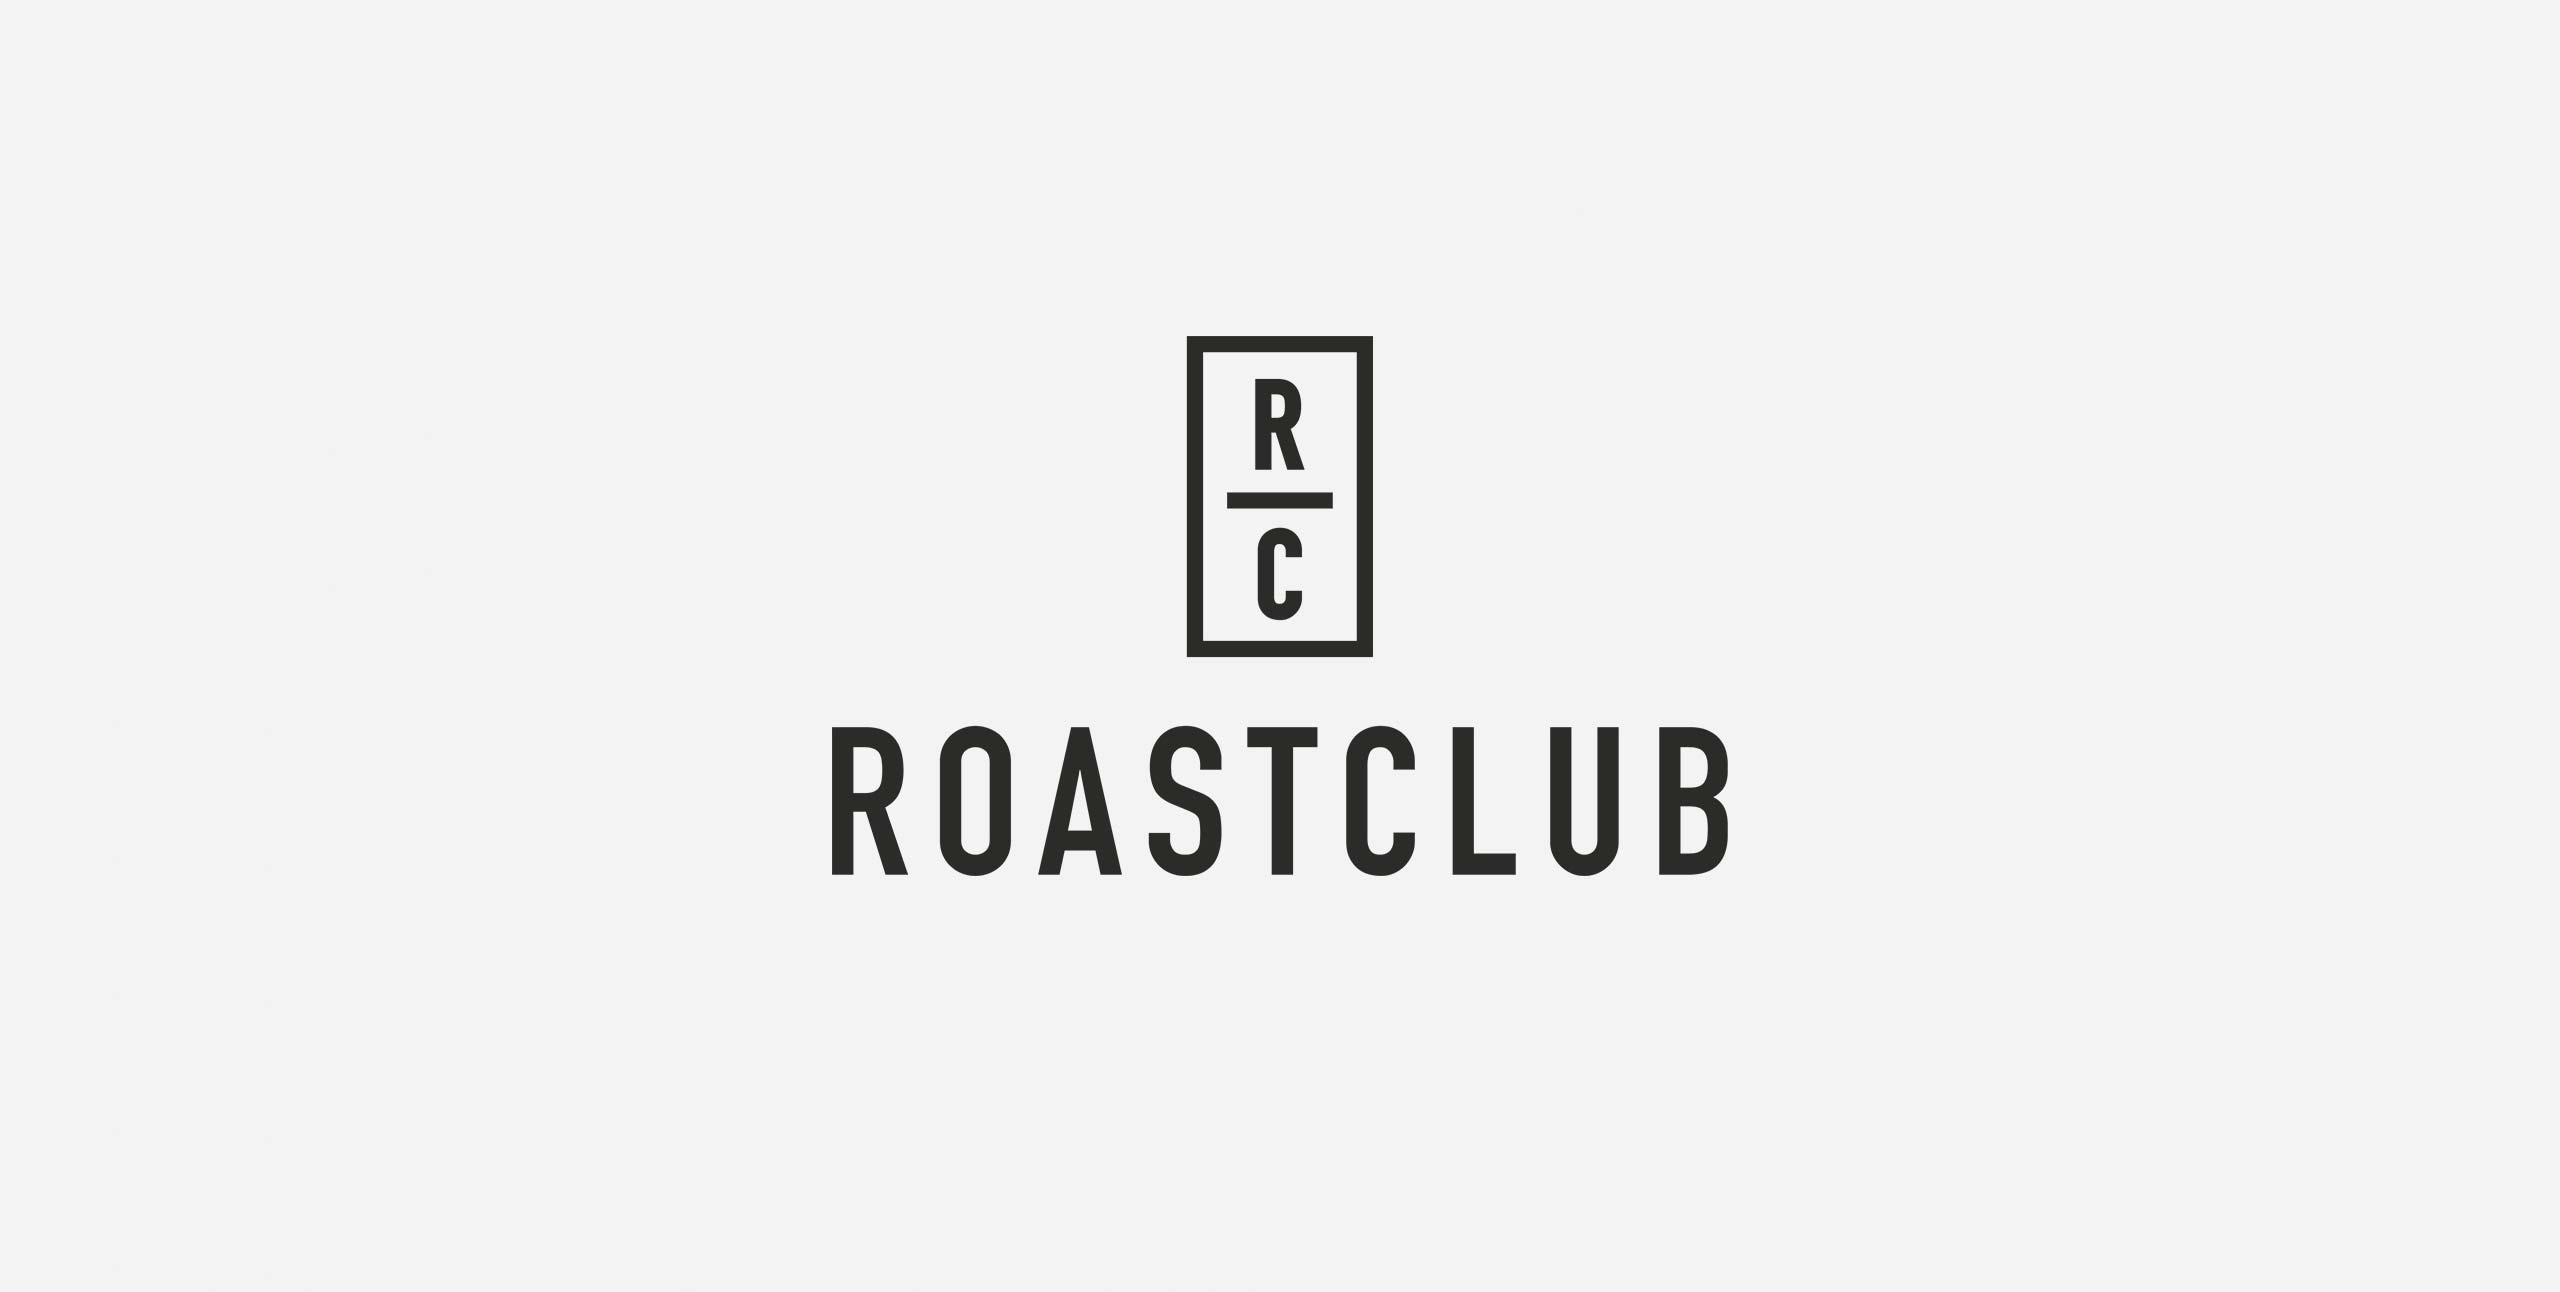 Logo Development of Roastclub Coffee by the freelance Art Director UI/UX Designer Christoph Gey from Leipzig, Germany